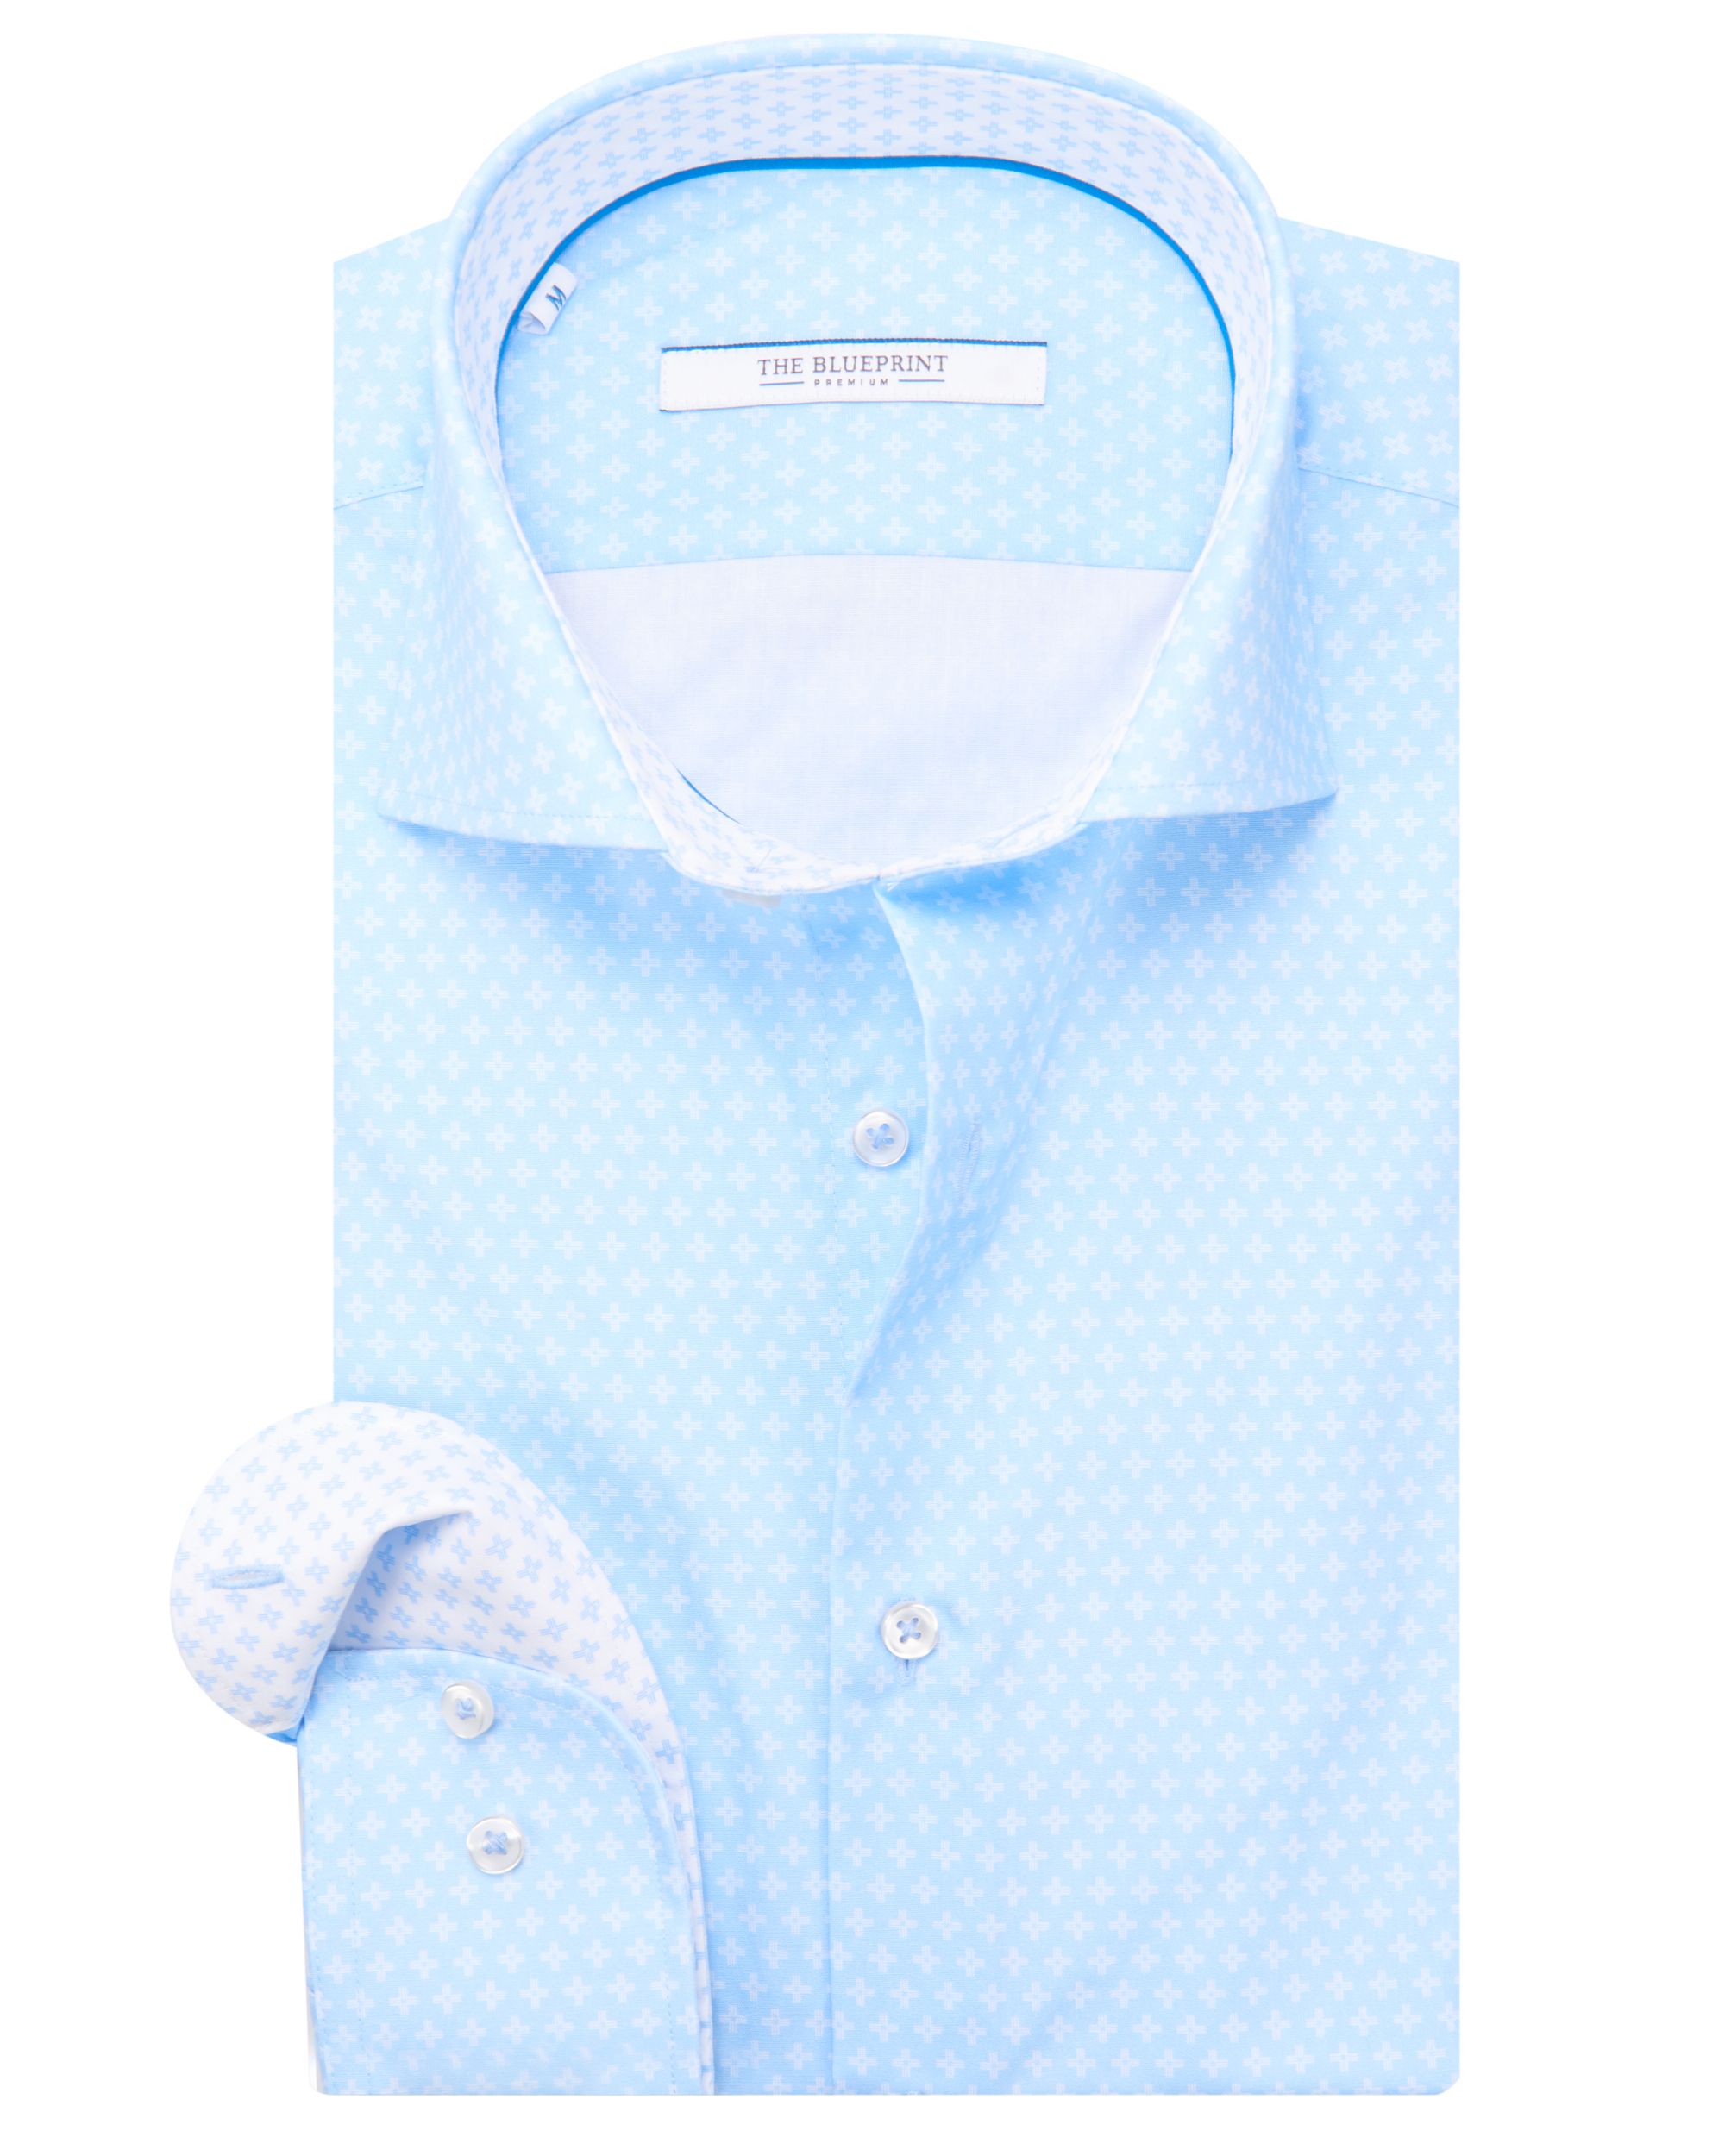 The BLUEPRINT Premium Casual Overhemd LM Blauw dessin 082256-001-L